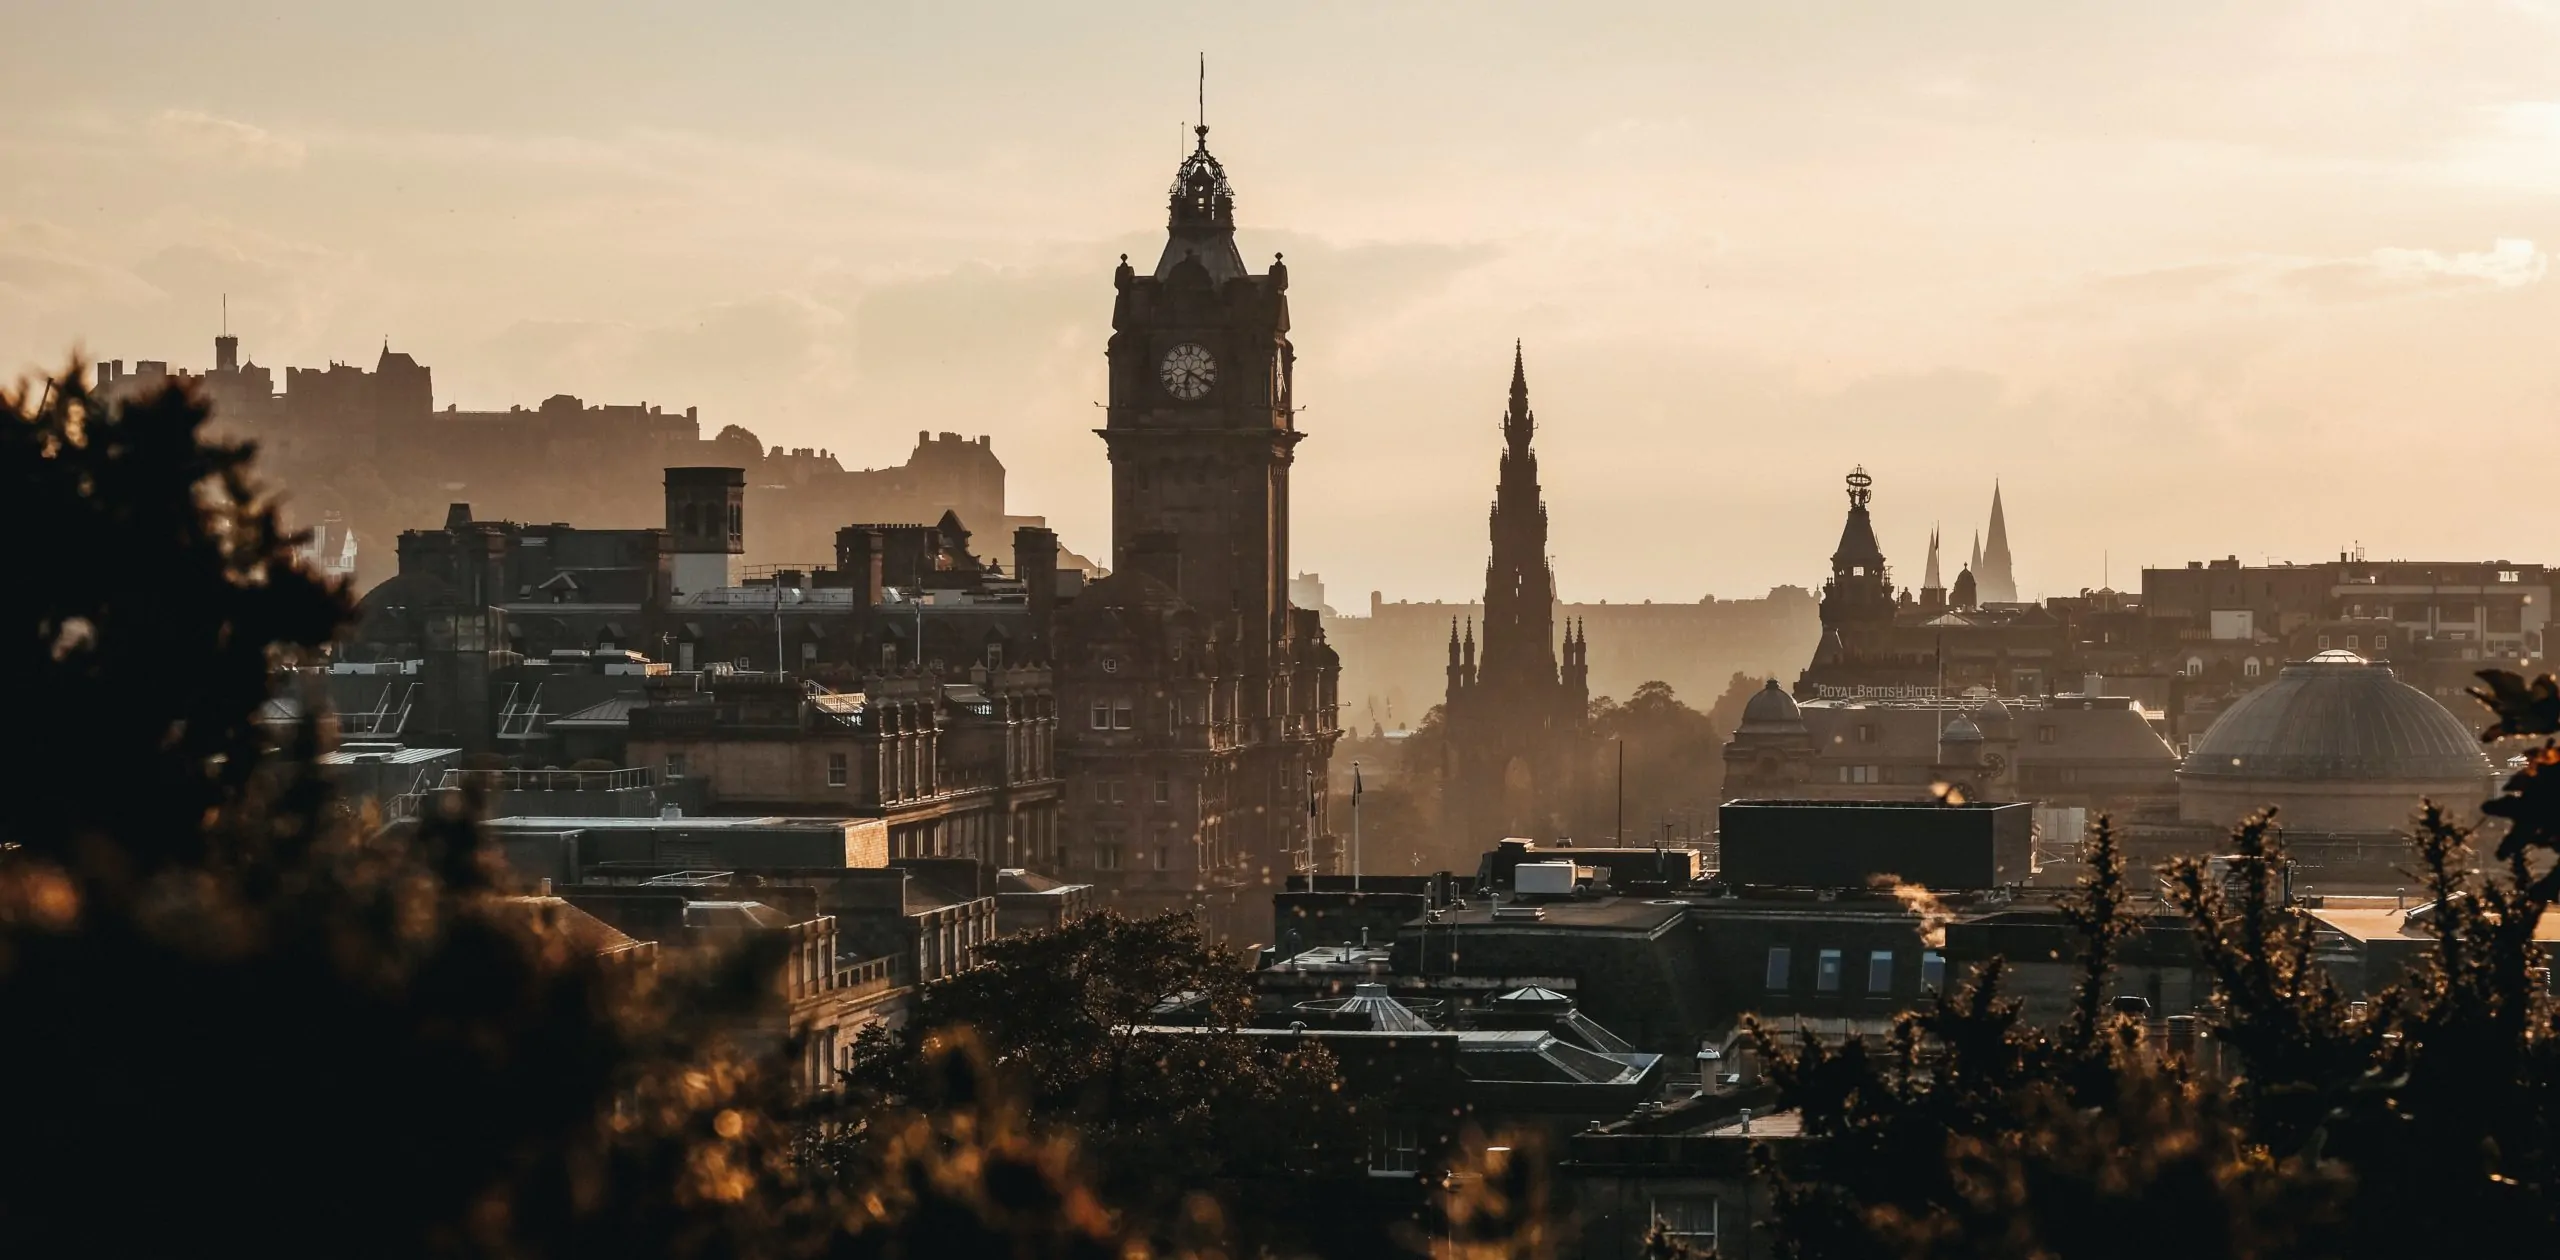 Discover Scotland's Captivating Capital with our Edinburgh City Guide